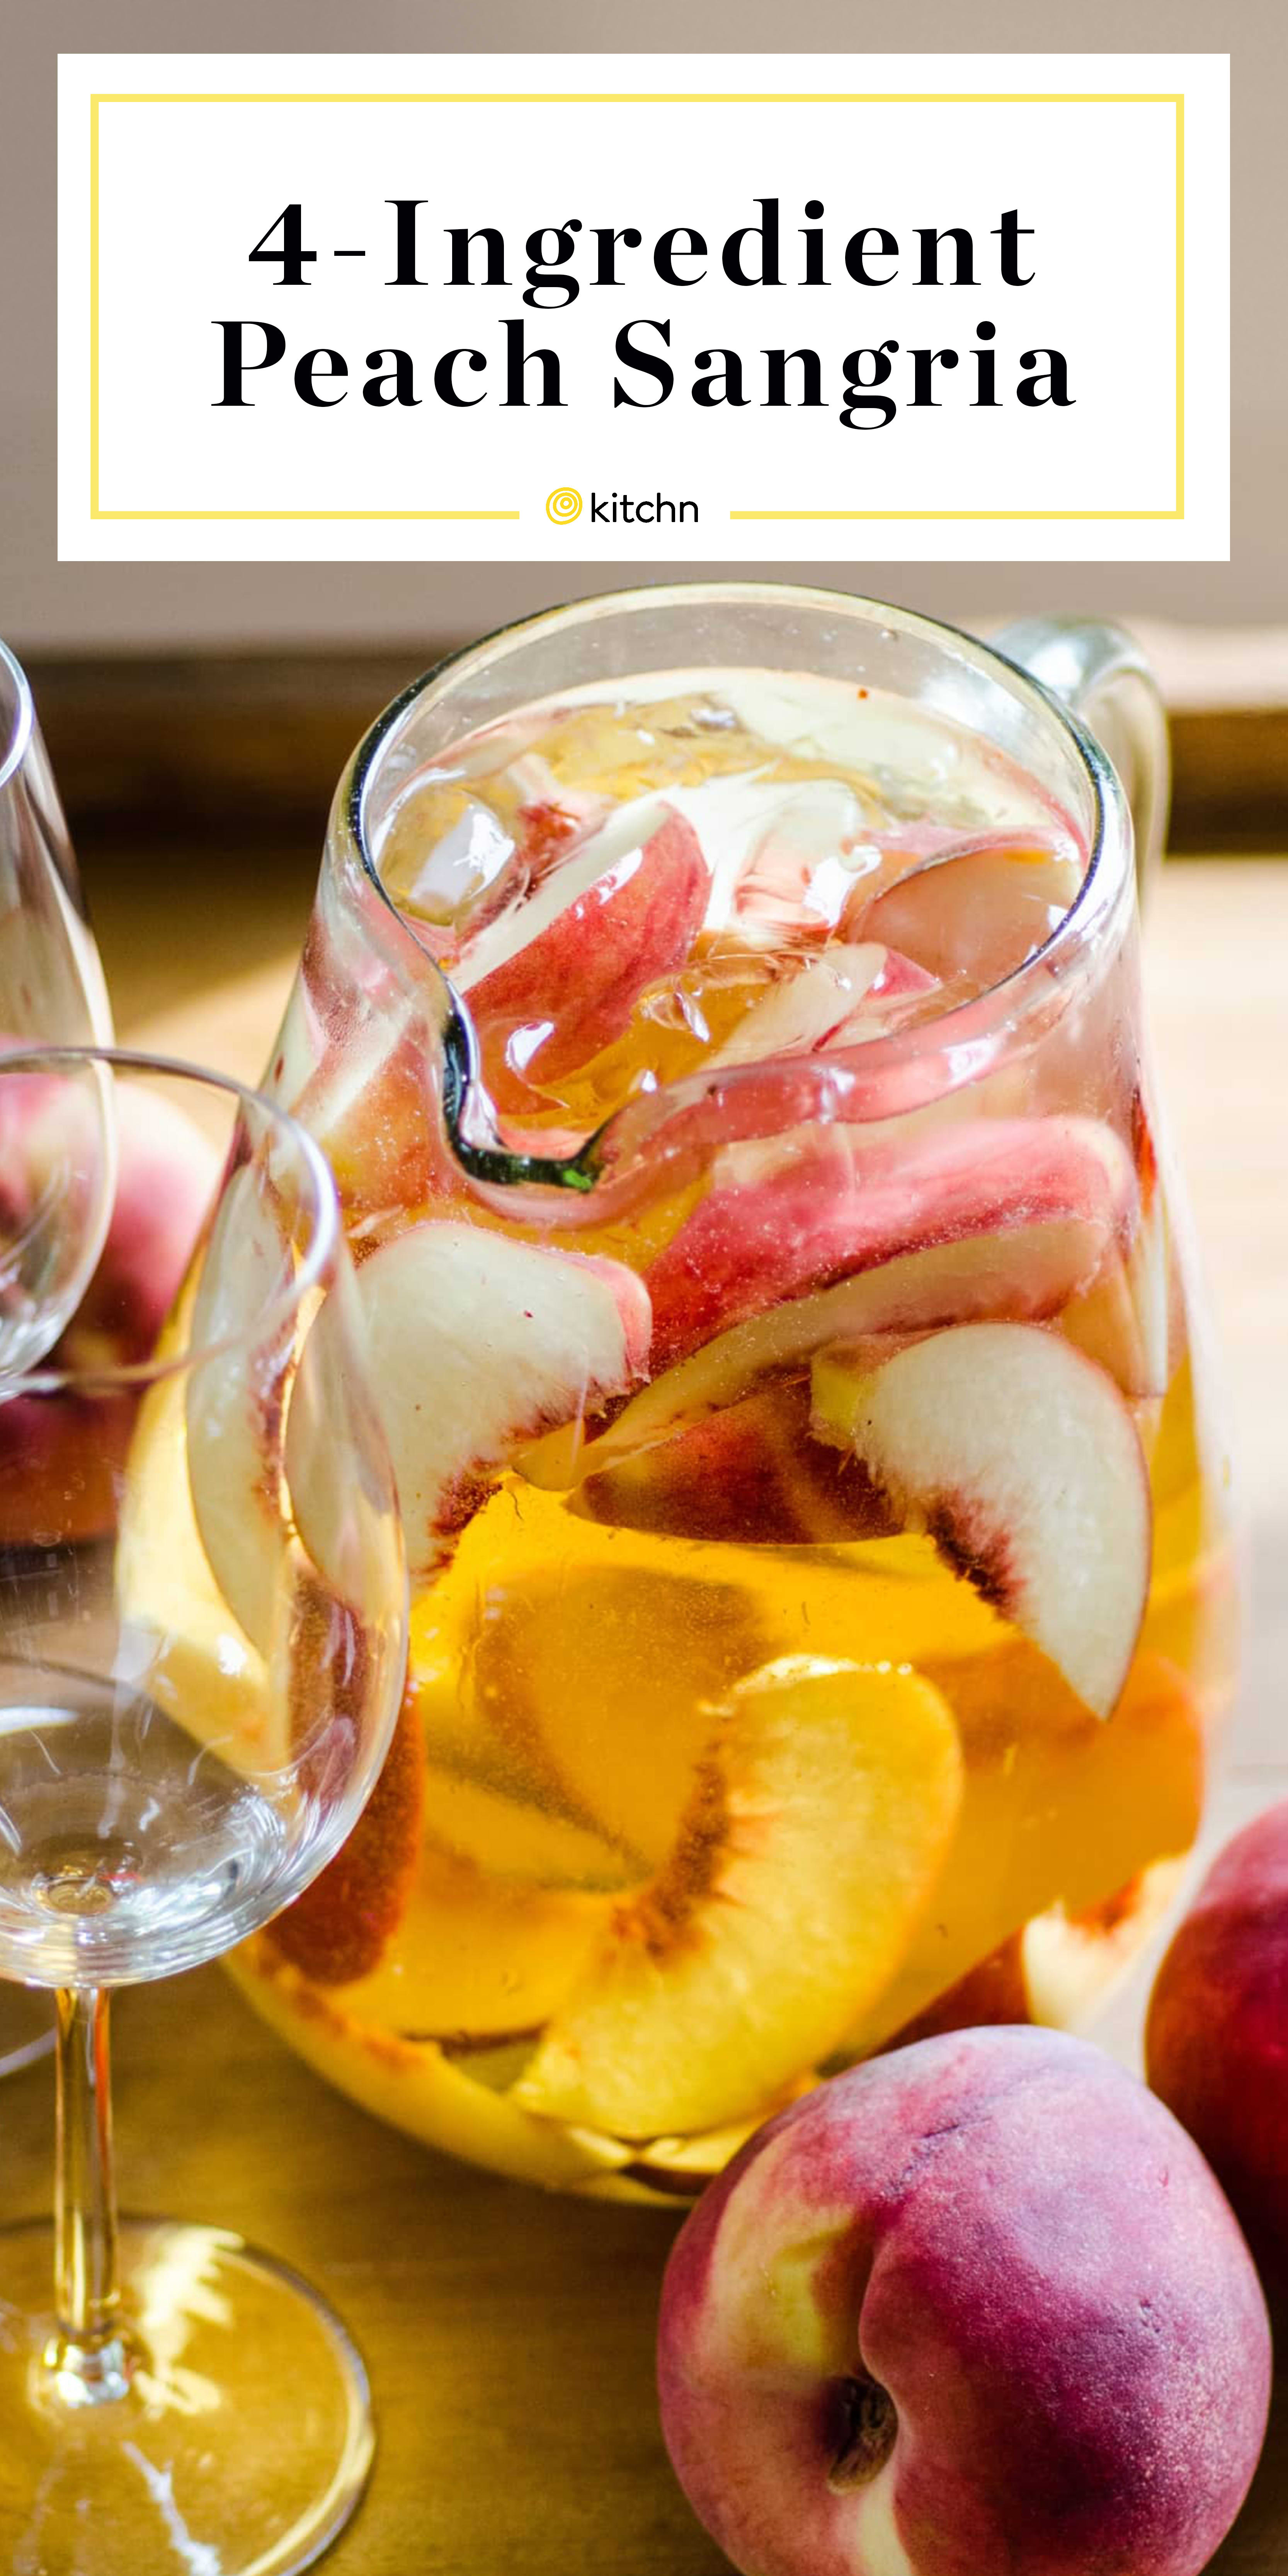 4 Ingredient Sparkling White Peach Sangria Recipe Kitchn,Shrimp Newburg With Cream Of Shrimp Soup